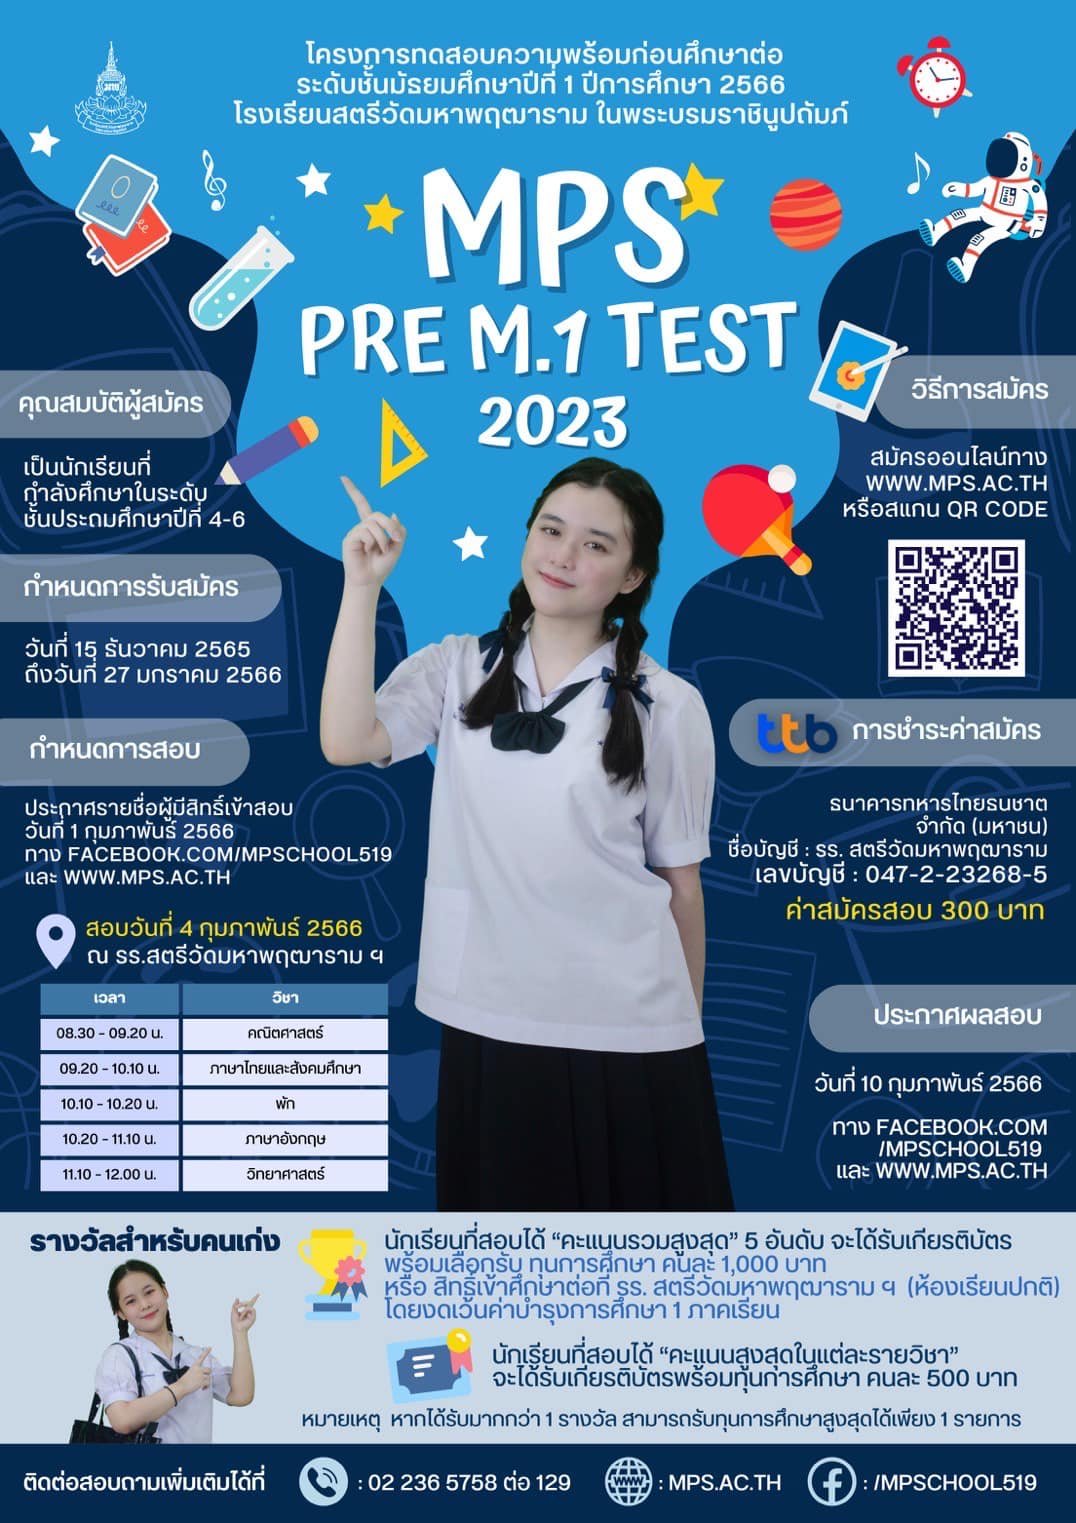 MPS PRE M.1 TEST 2023 พรีเทส สอบเข้าม.1 โรงเรียนสตรีวัดมหาพฤฒารามฯ